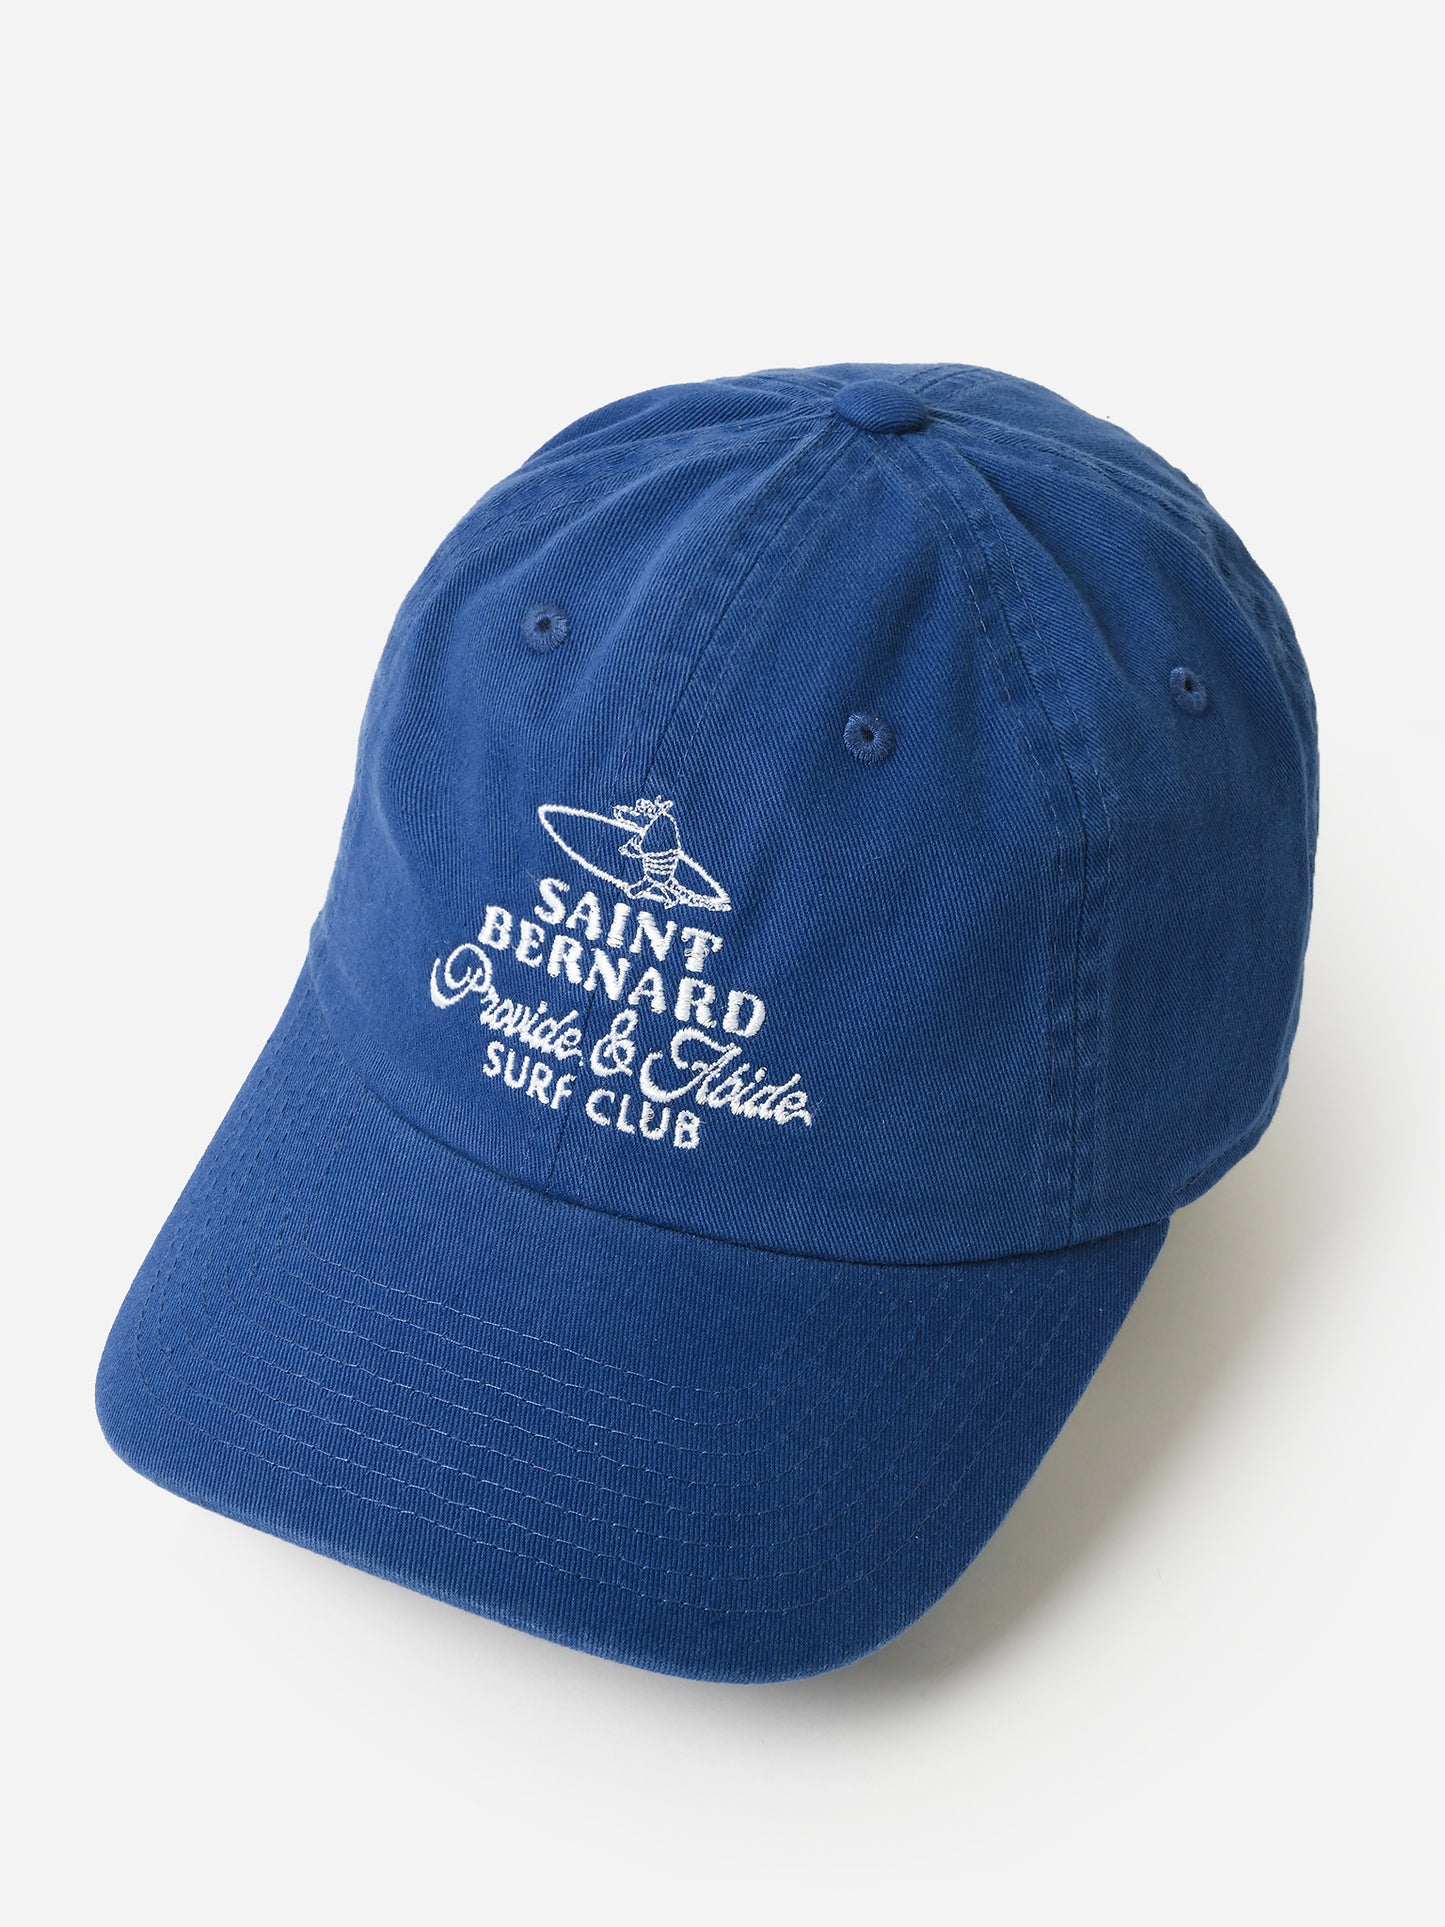 Saint Bernard Surf Club Washed Slouch Hat